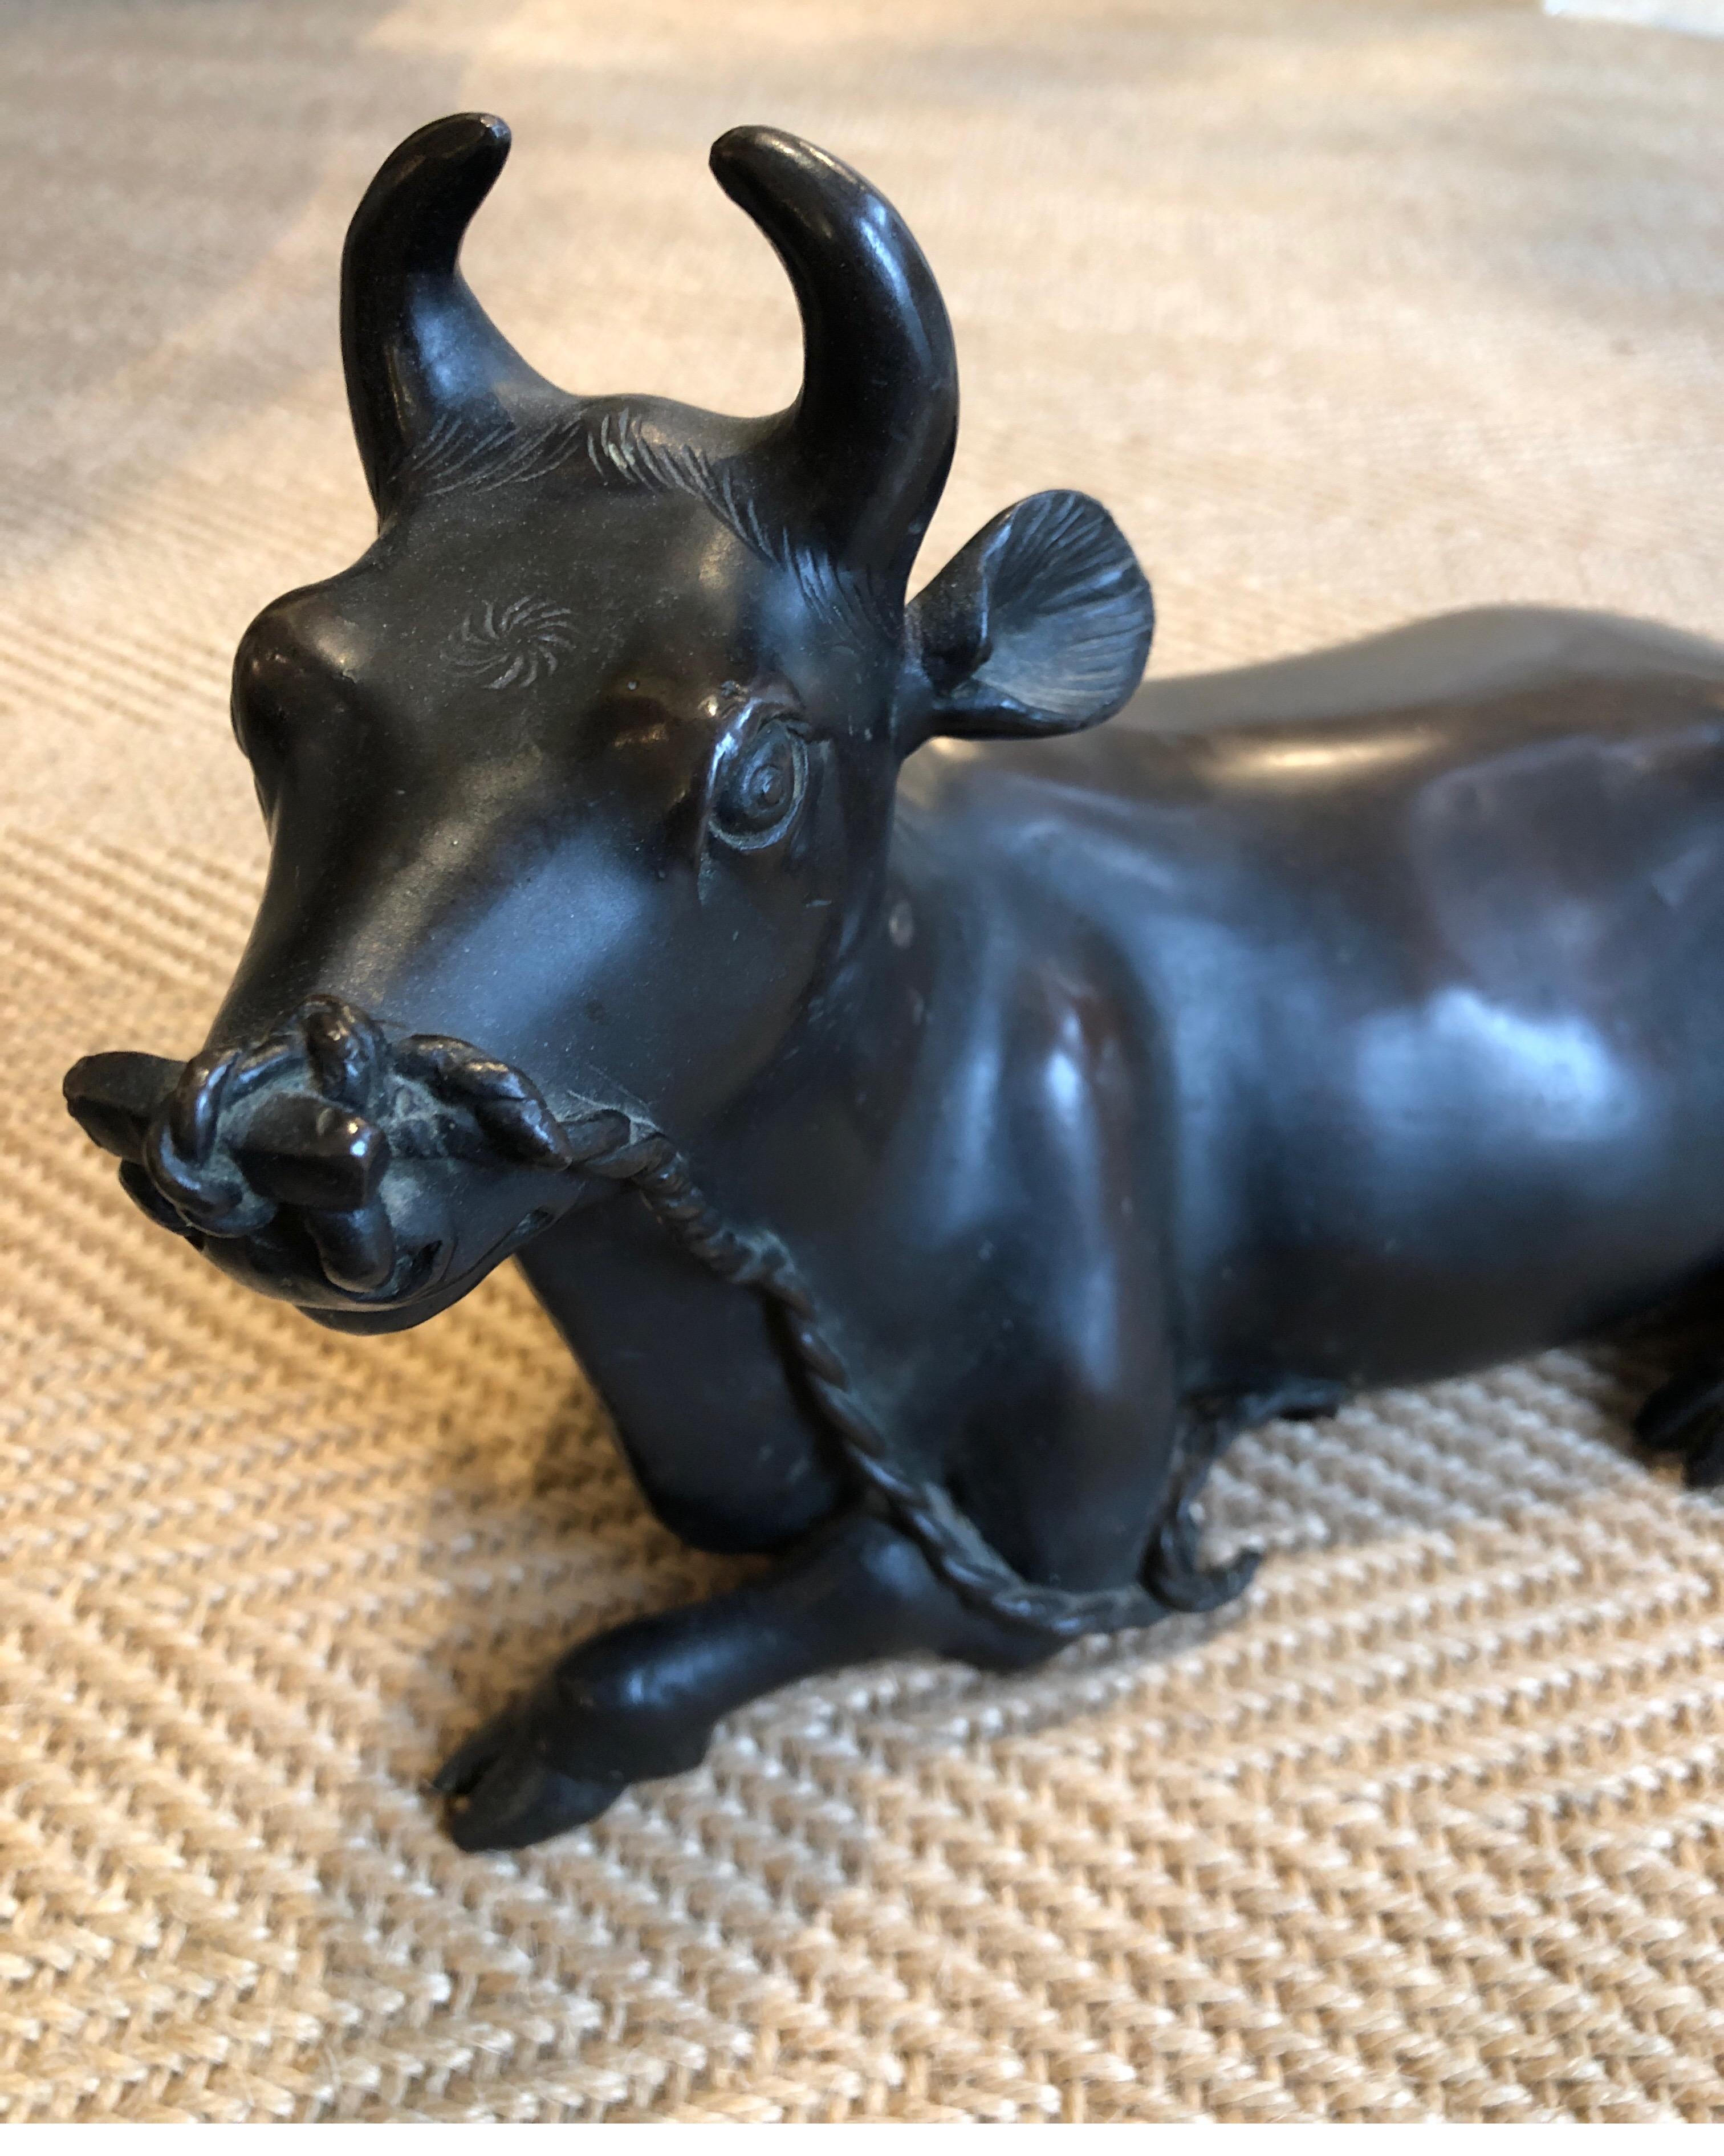 Vintage bronze bull. 
Measures: 13” L x 7.5” H x 6” W.